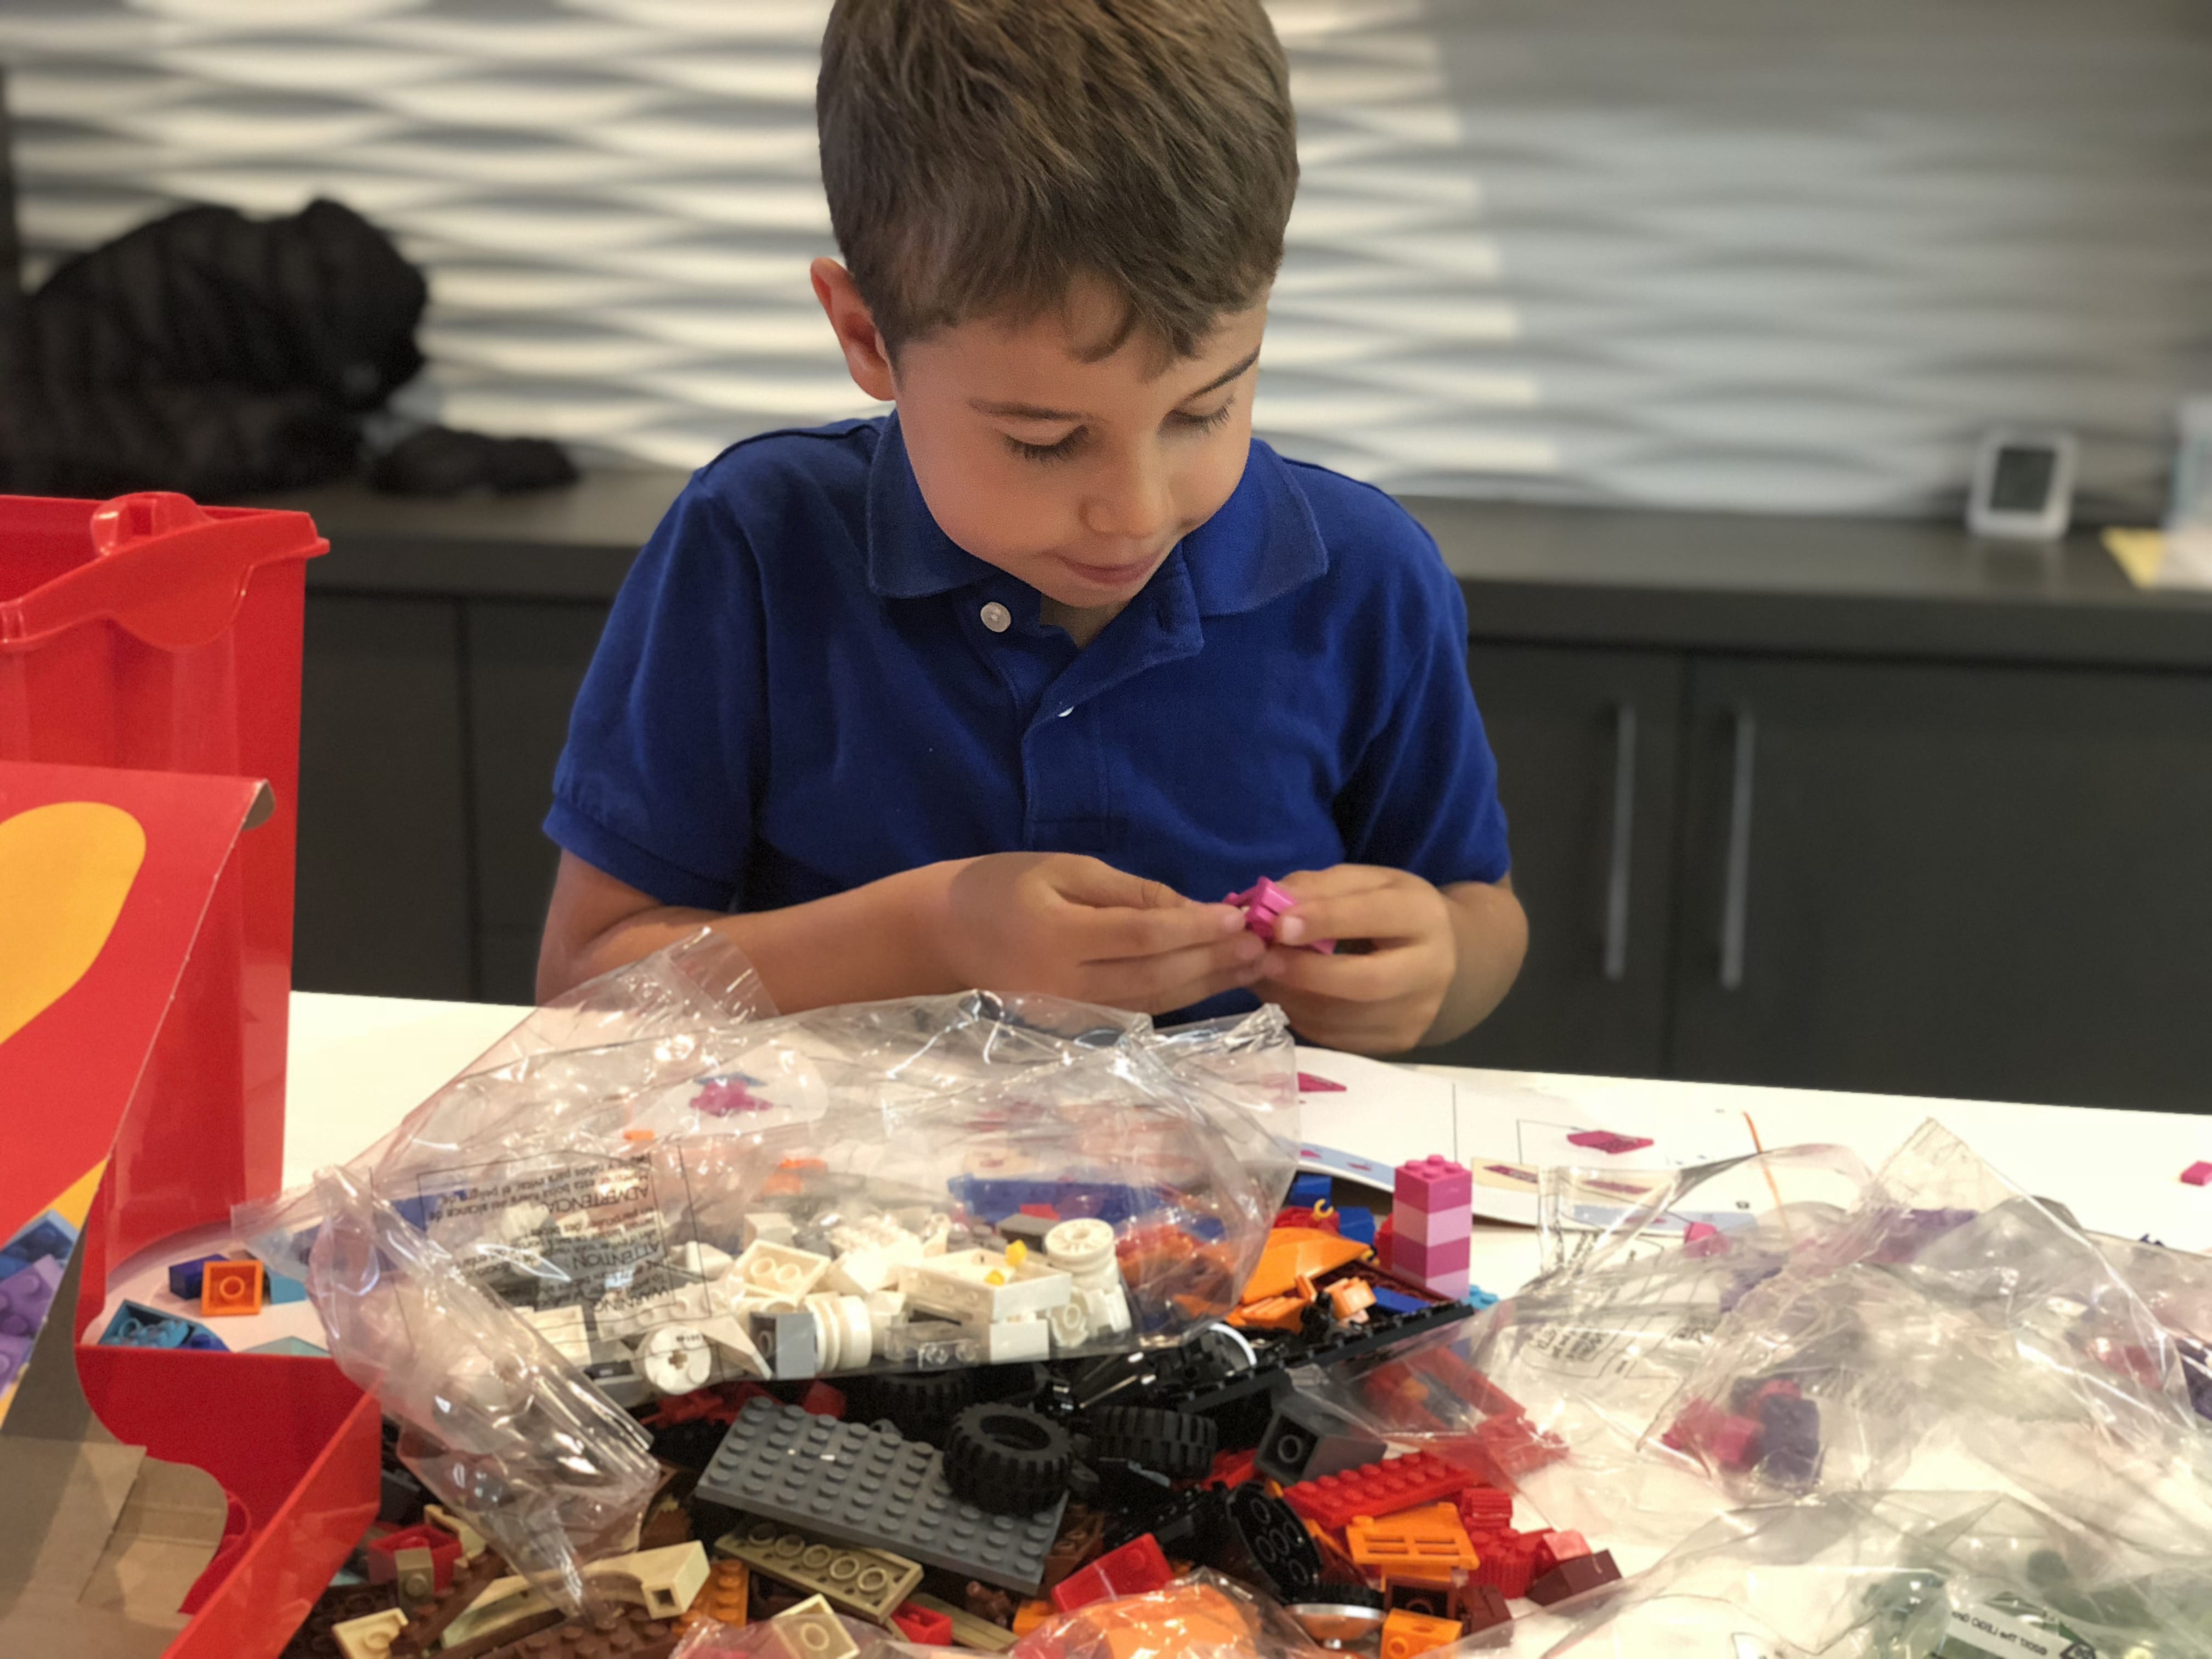 Celebrate National STEM Day with LEGO2